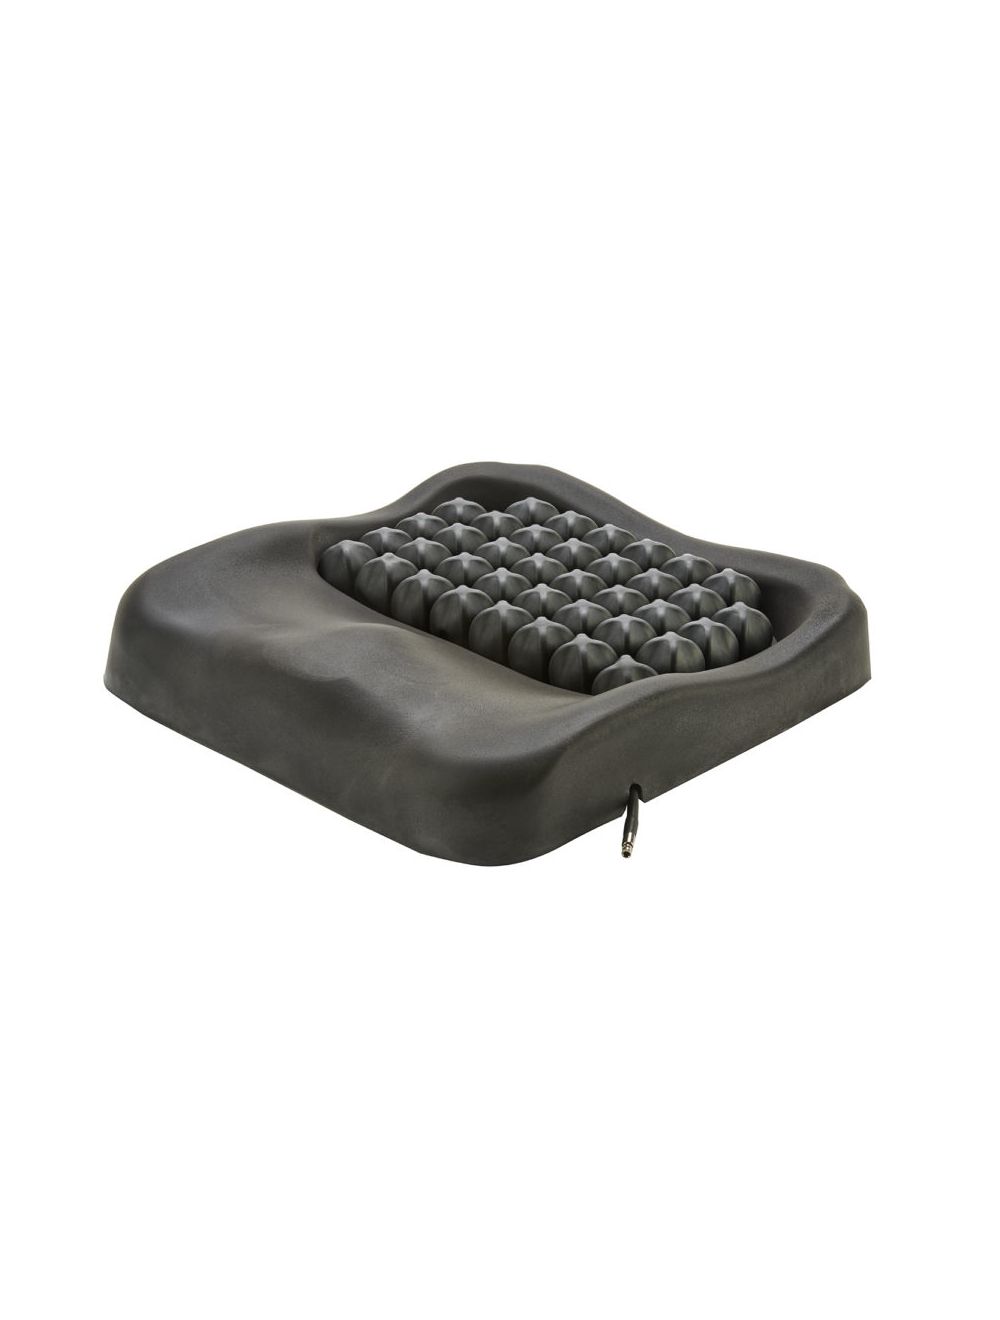 ROHO Shower/Commode Cushion